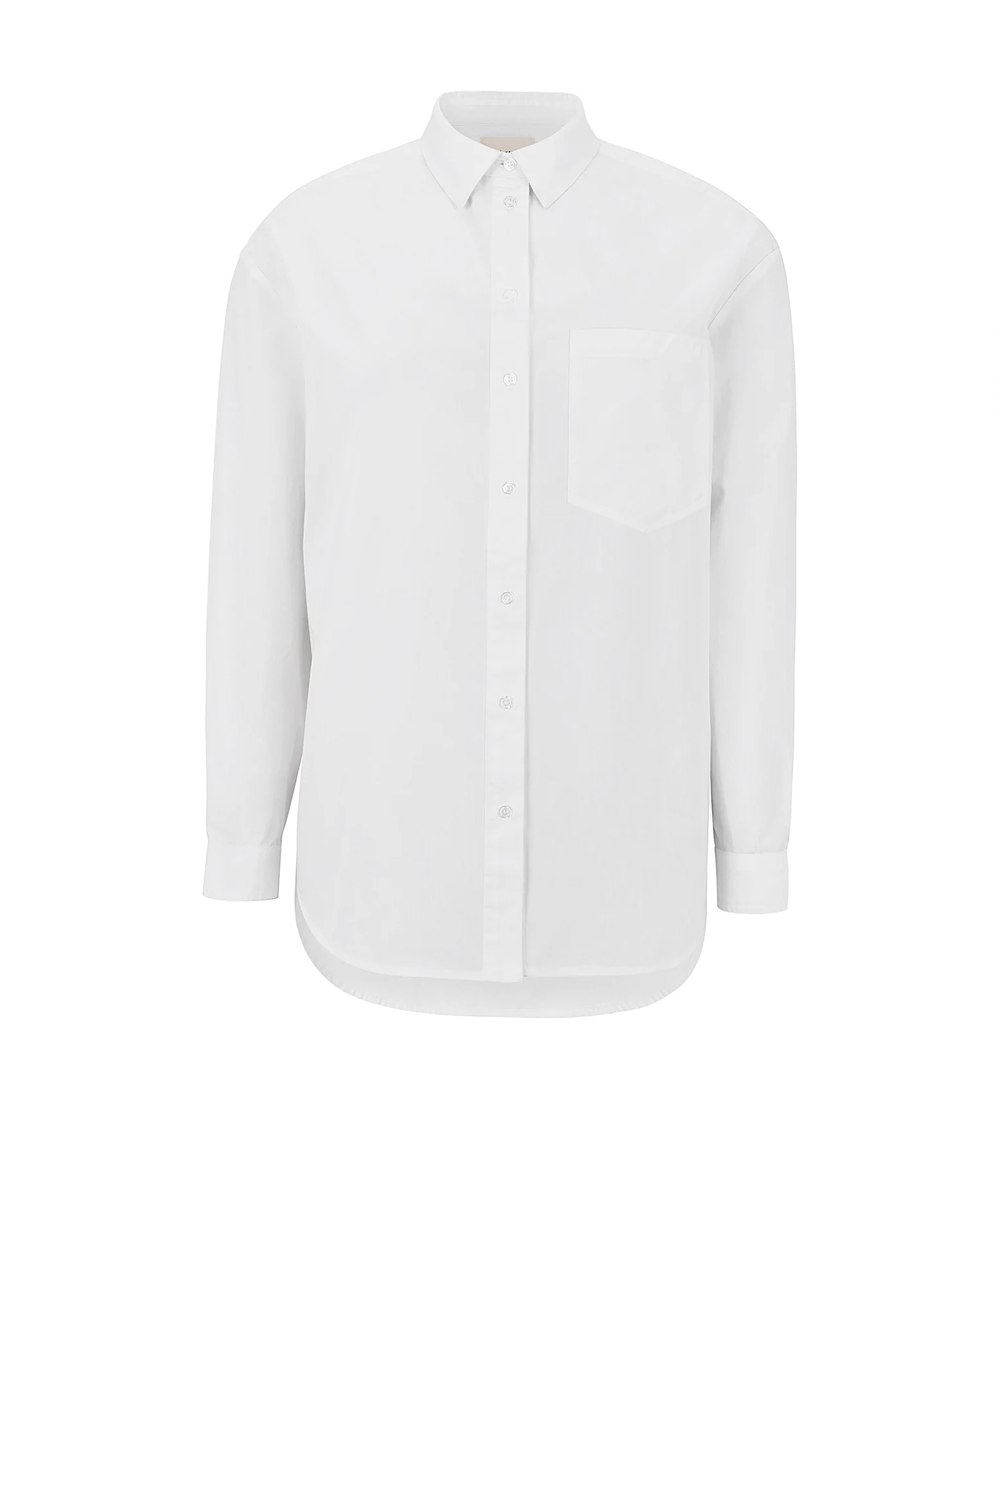 Ava Oversize Shirt, White